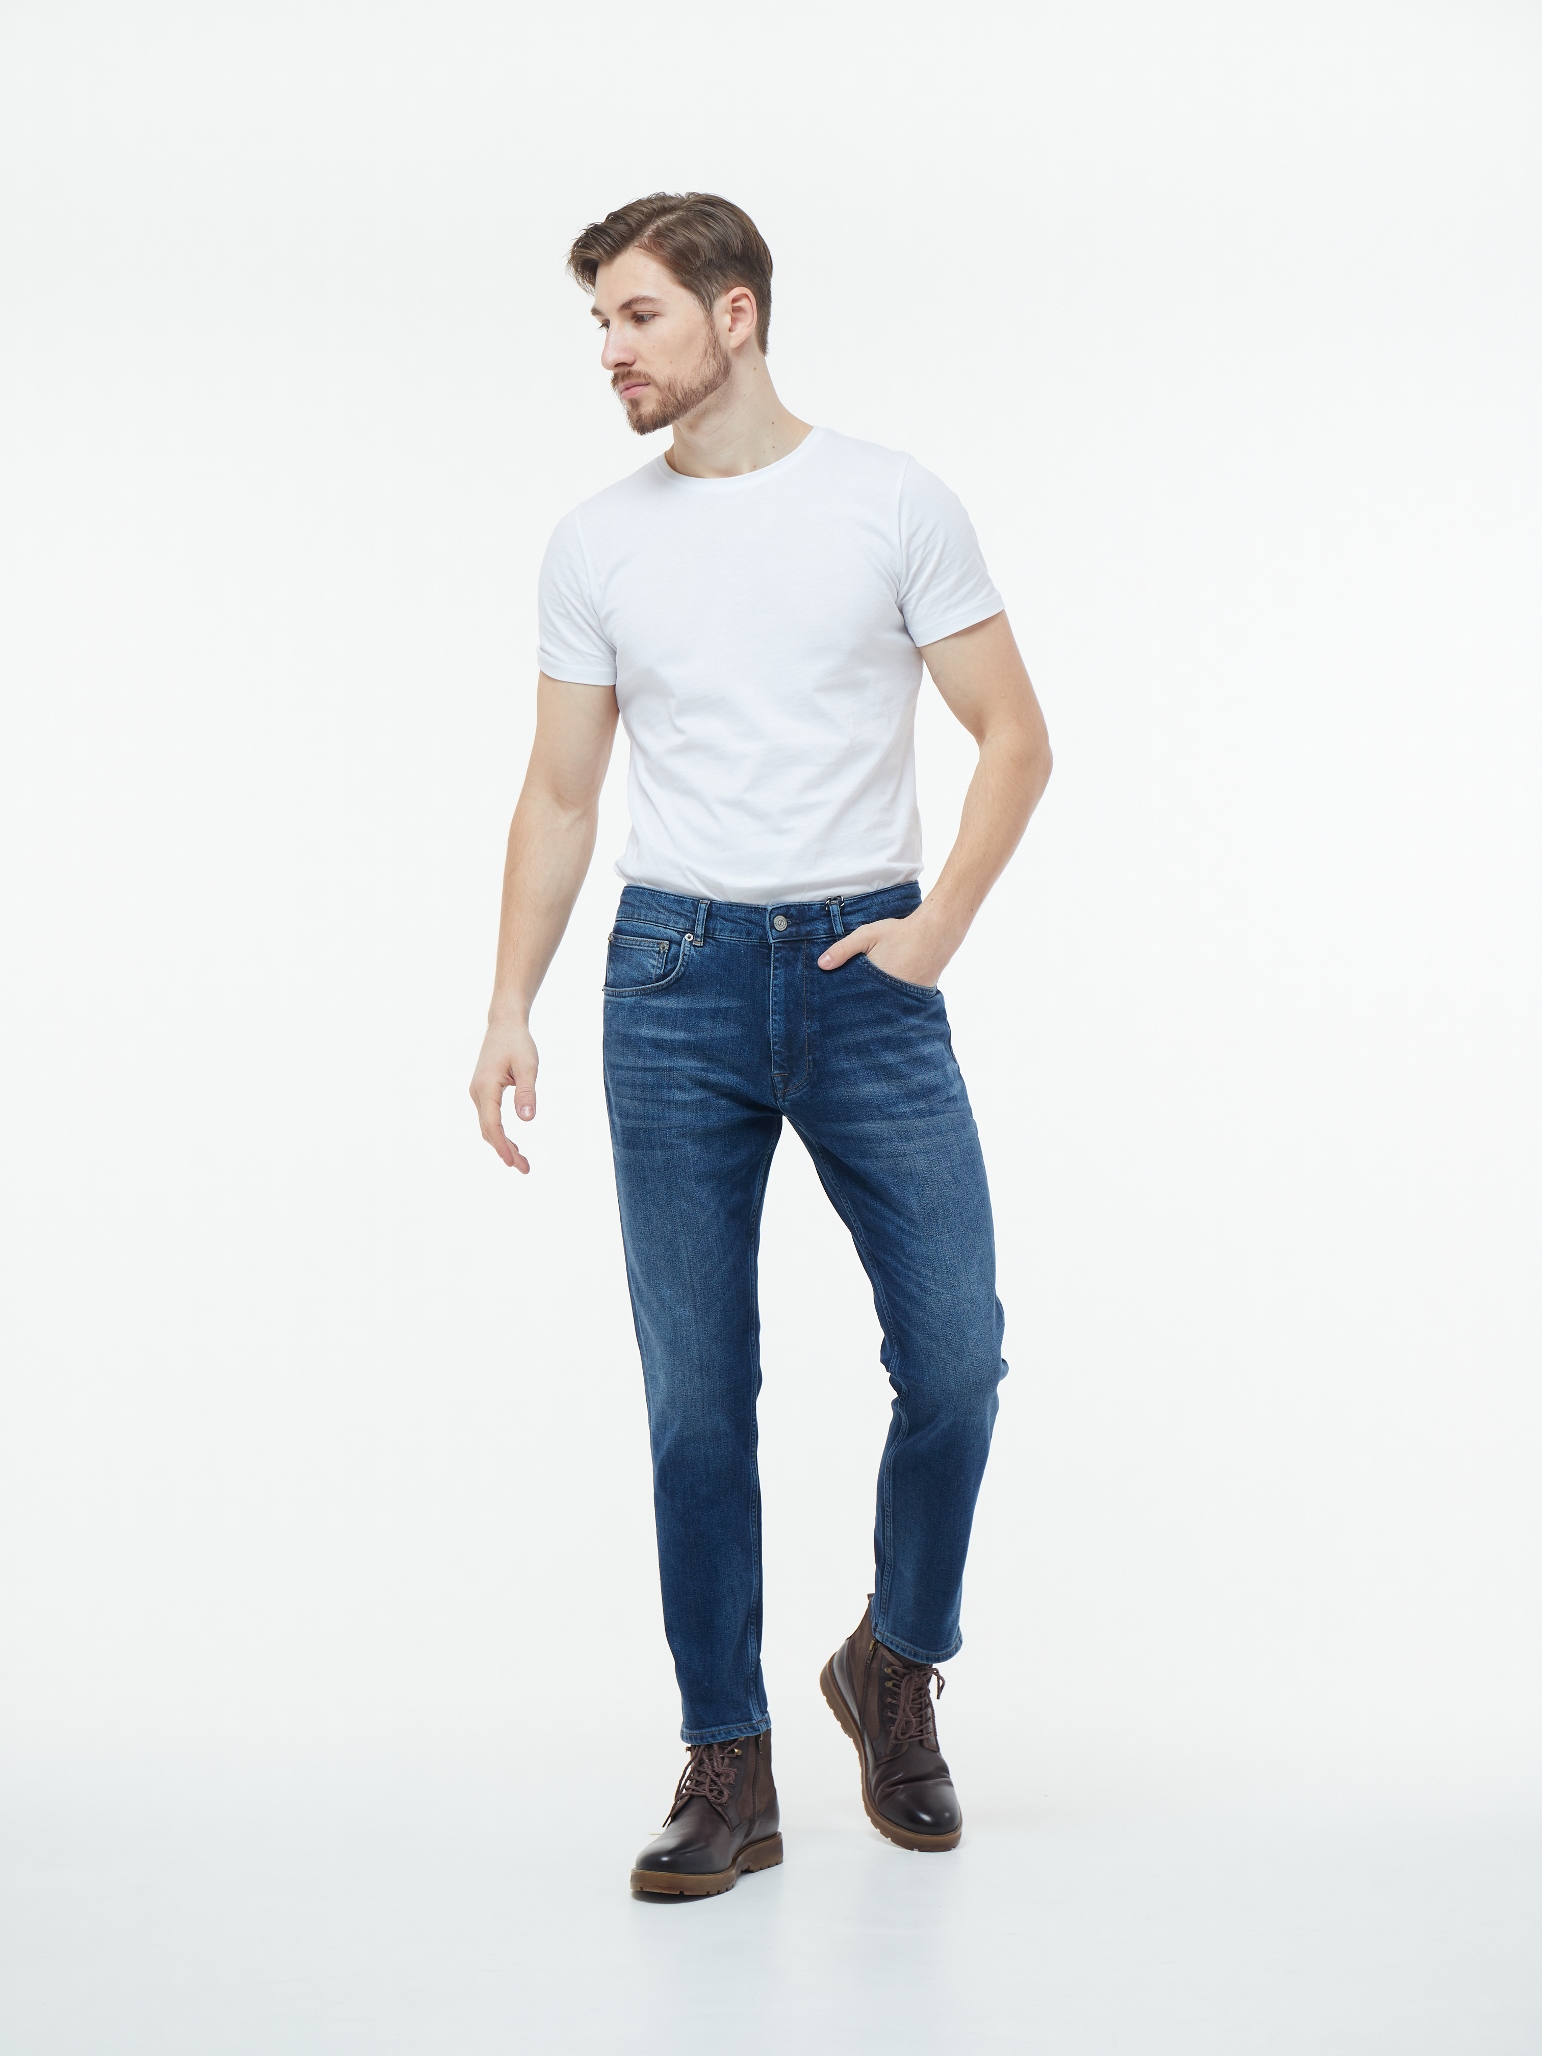 Чоловічі джинси Cropped GUSTAV 1074 | Men's jeans Cropped GUSTAV 1074